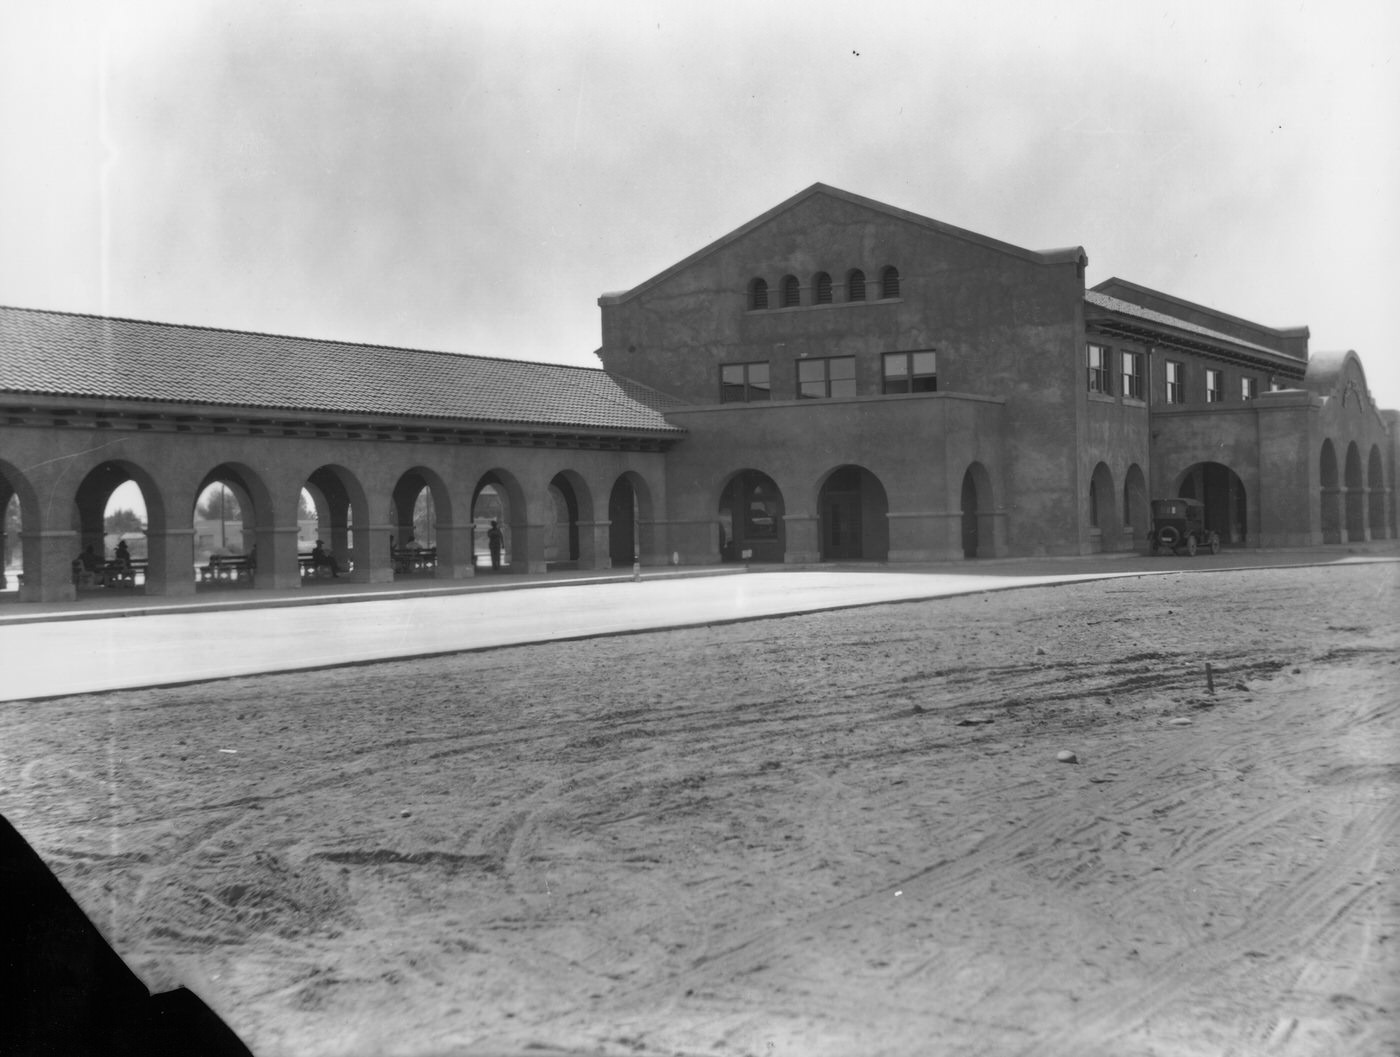 Glendale Sugar Factory, 1930s